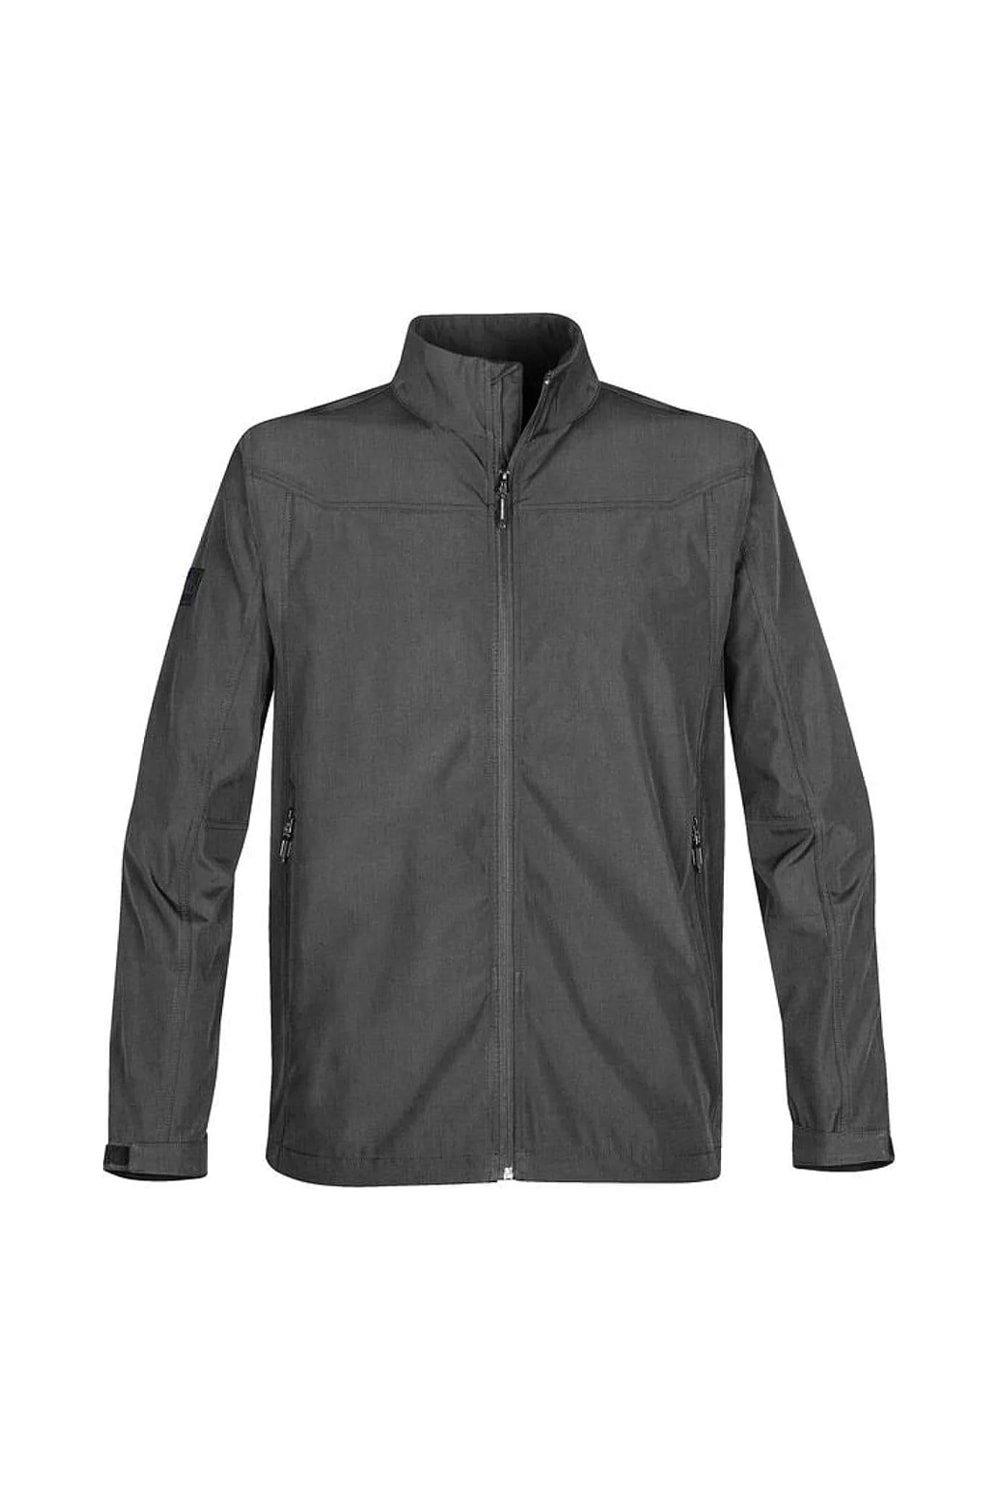 Куртка Endurance Soft Shell Stormtech, серый куртка nostromo thermal soft shell stormtech серый